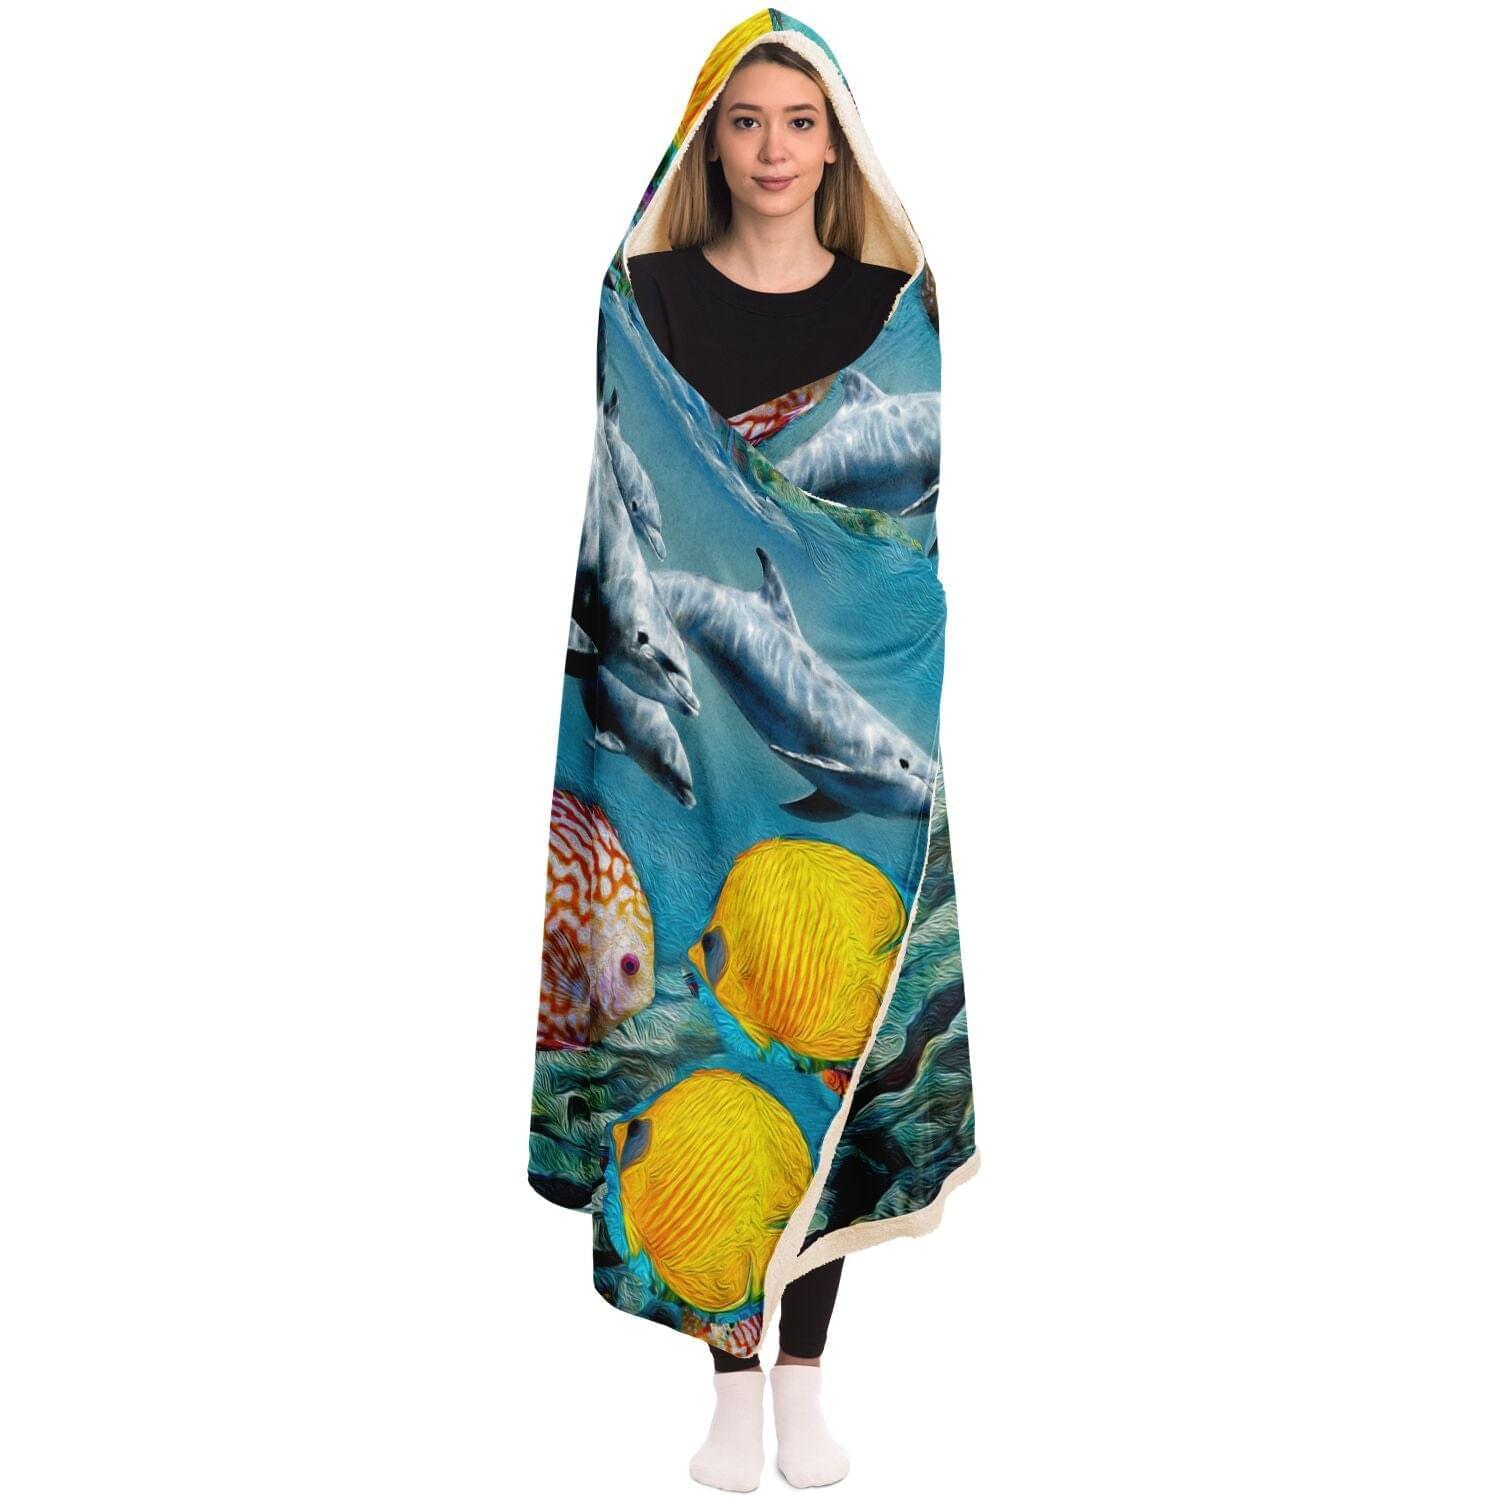 Dolphins Apparel Hooded Blanket Gift Idea HOO-DESIGN.SHOP